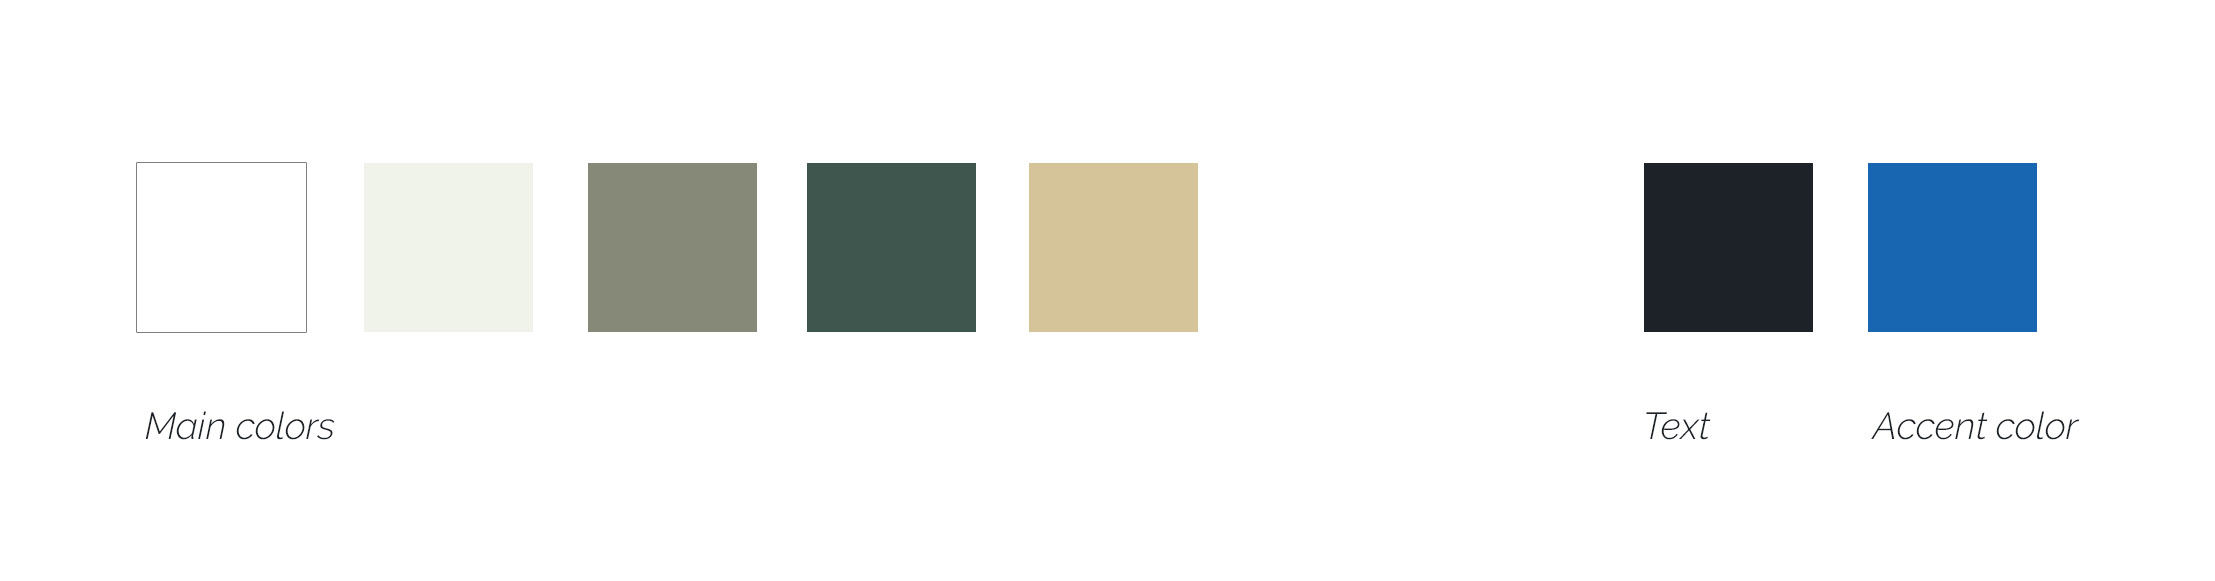 colosseum spa branding color scheme